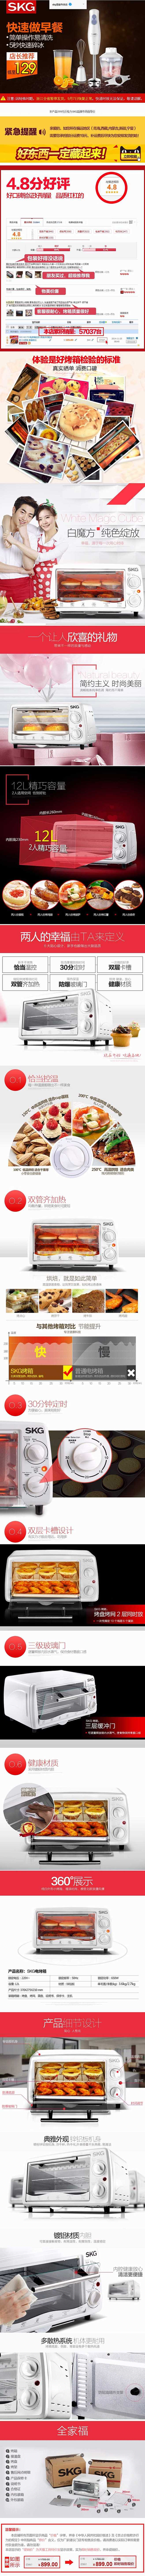 SKG kX1701 12L多功能电烤箱...